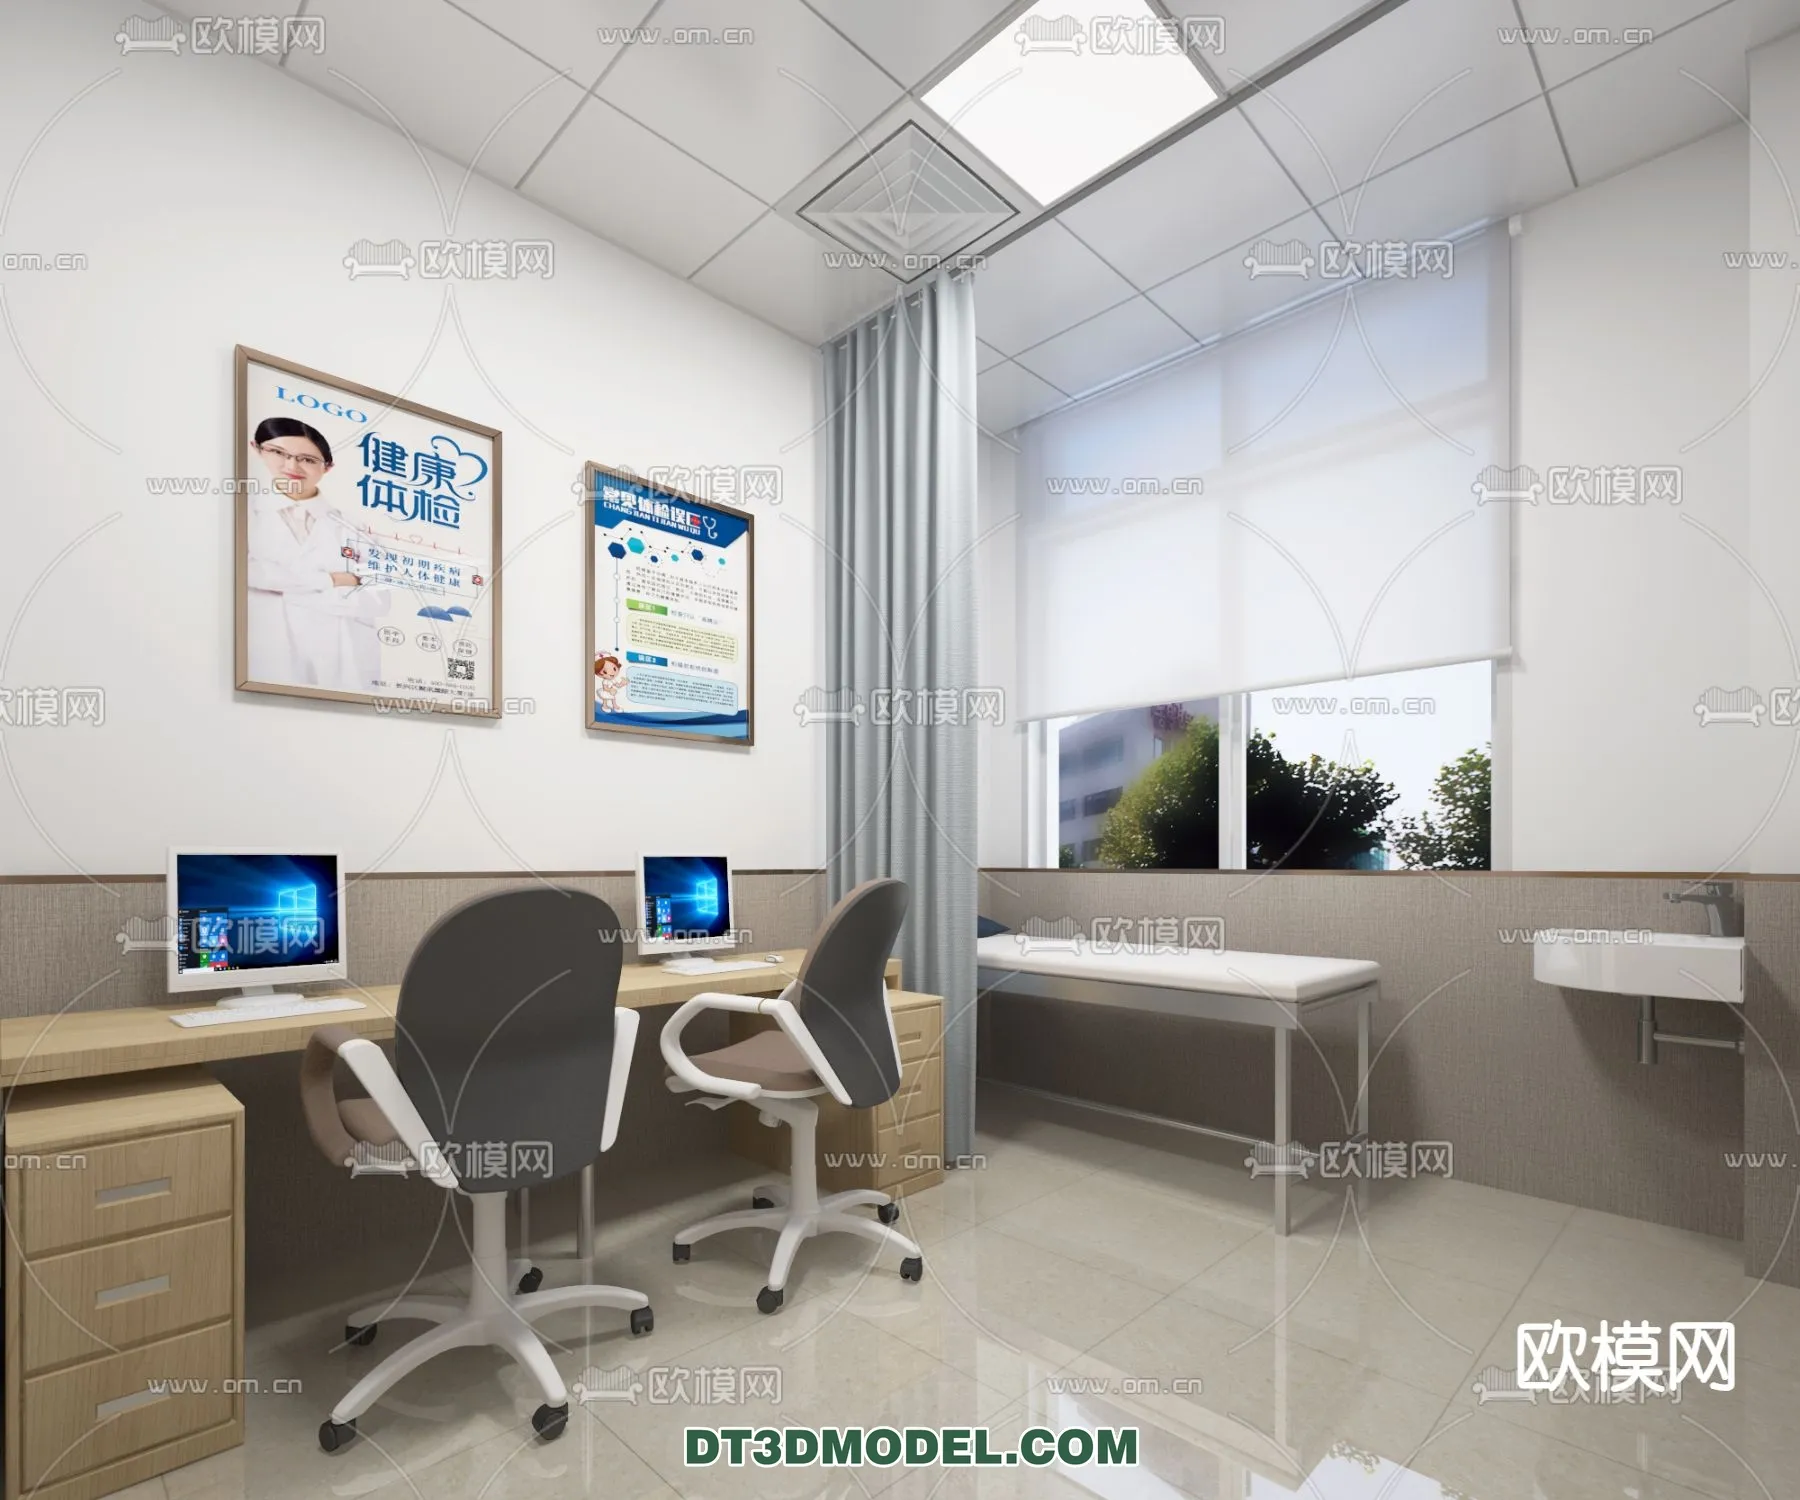 HOSPITAL 3D SCENES – MODERN – 0161